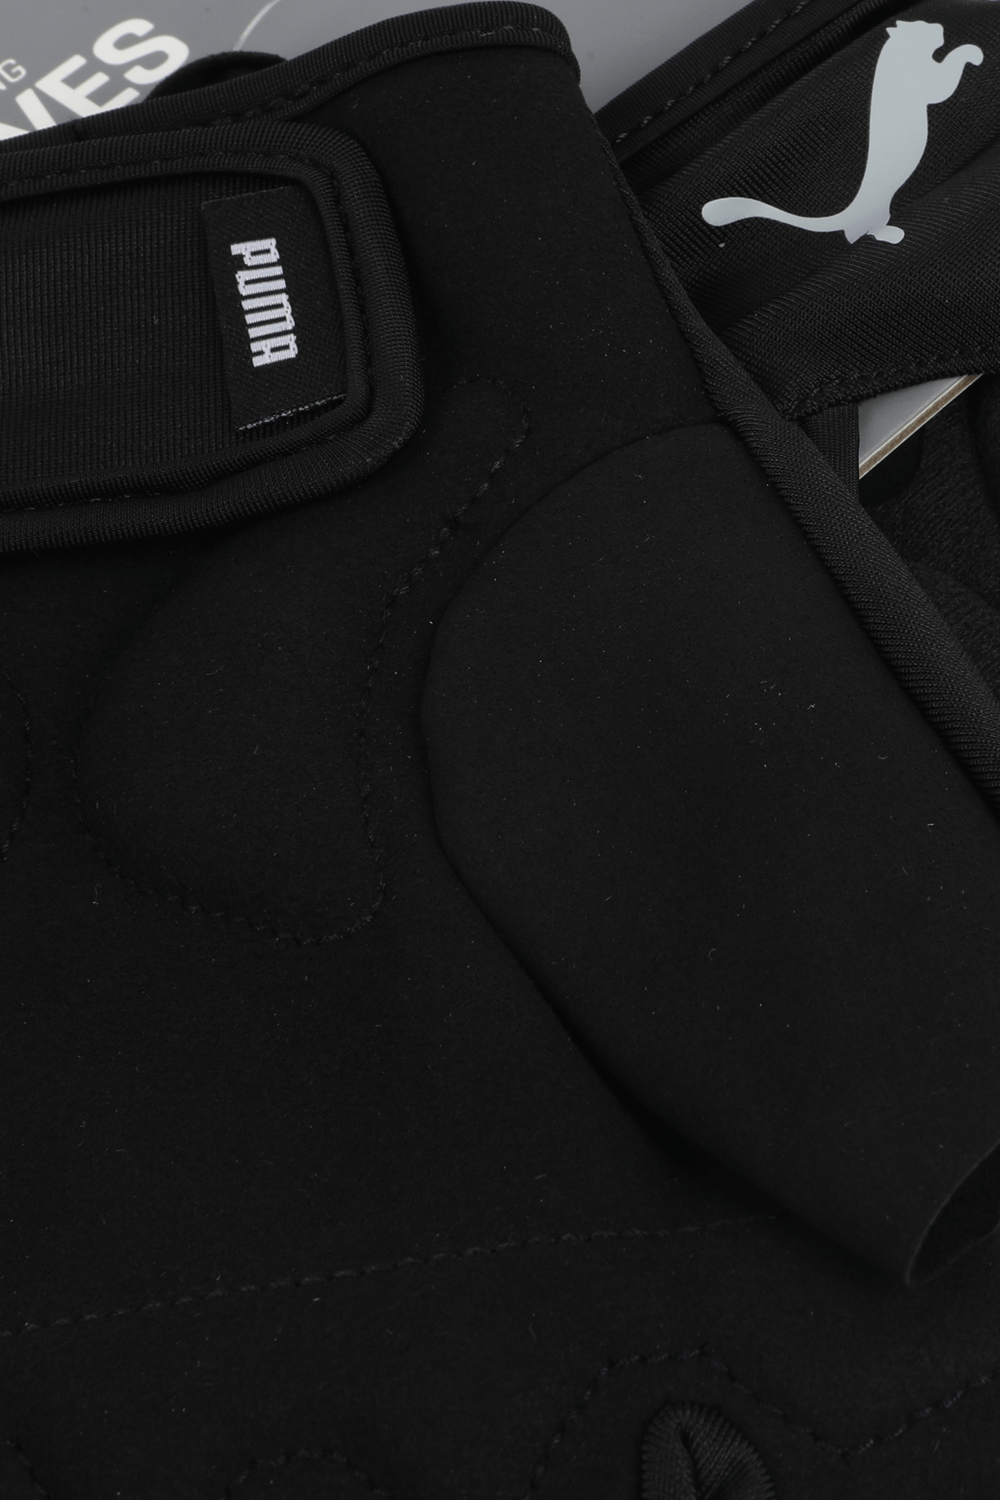 Essential Training Gloves in Black PUMA